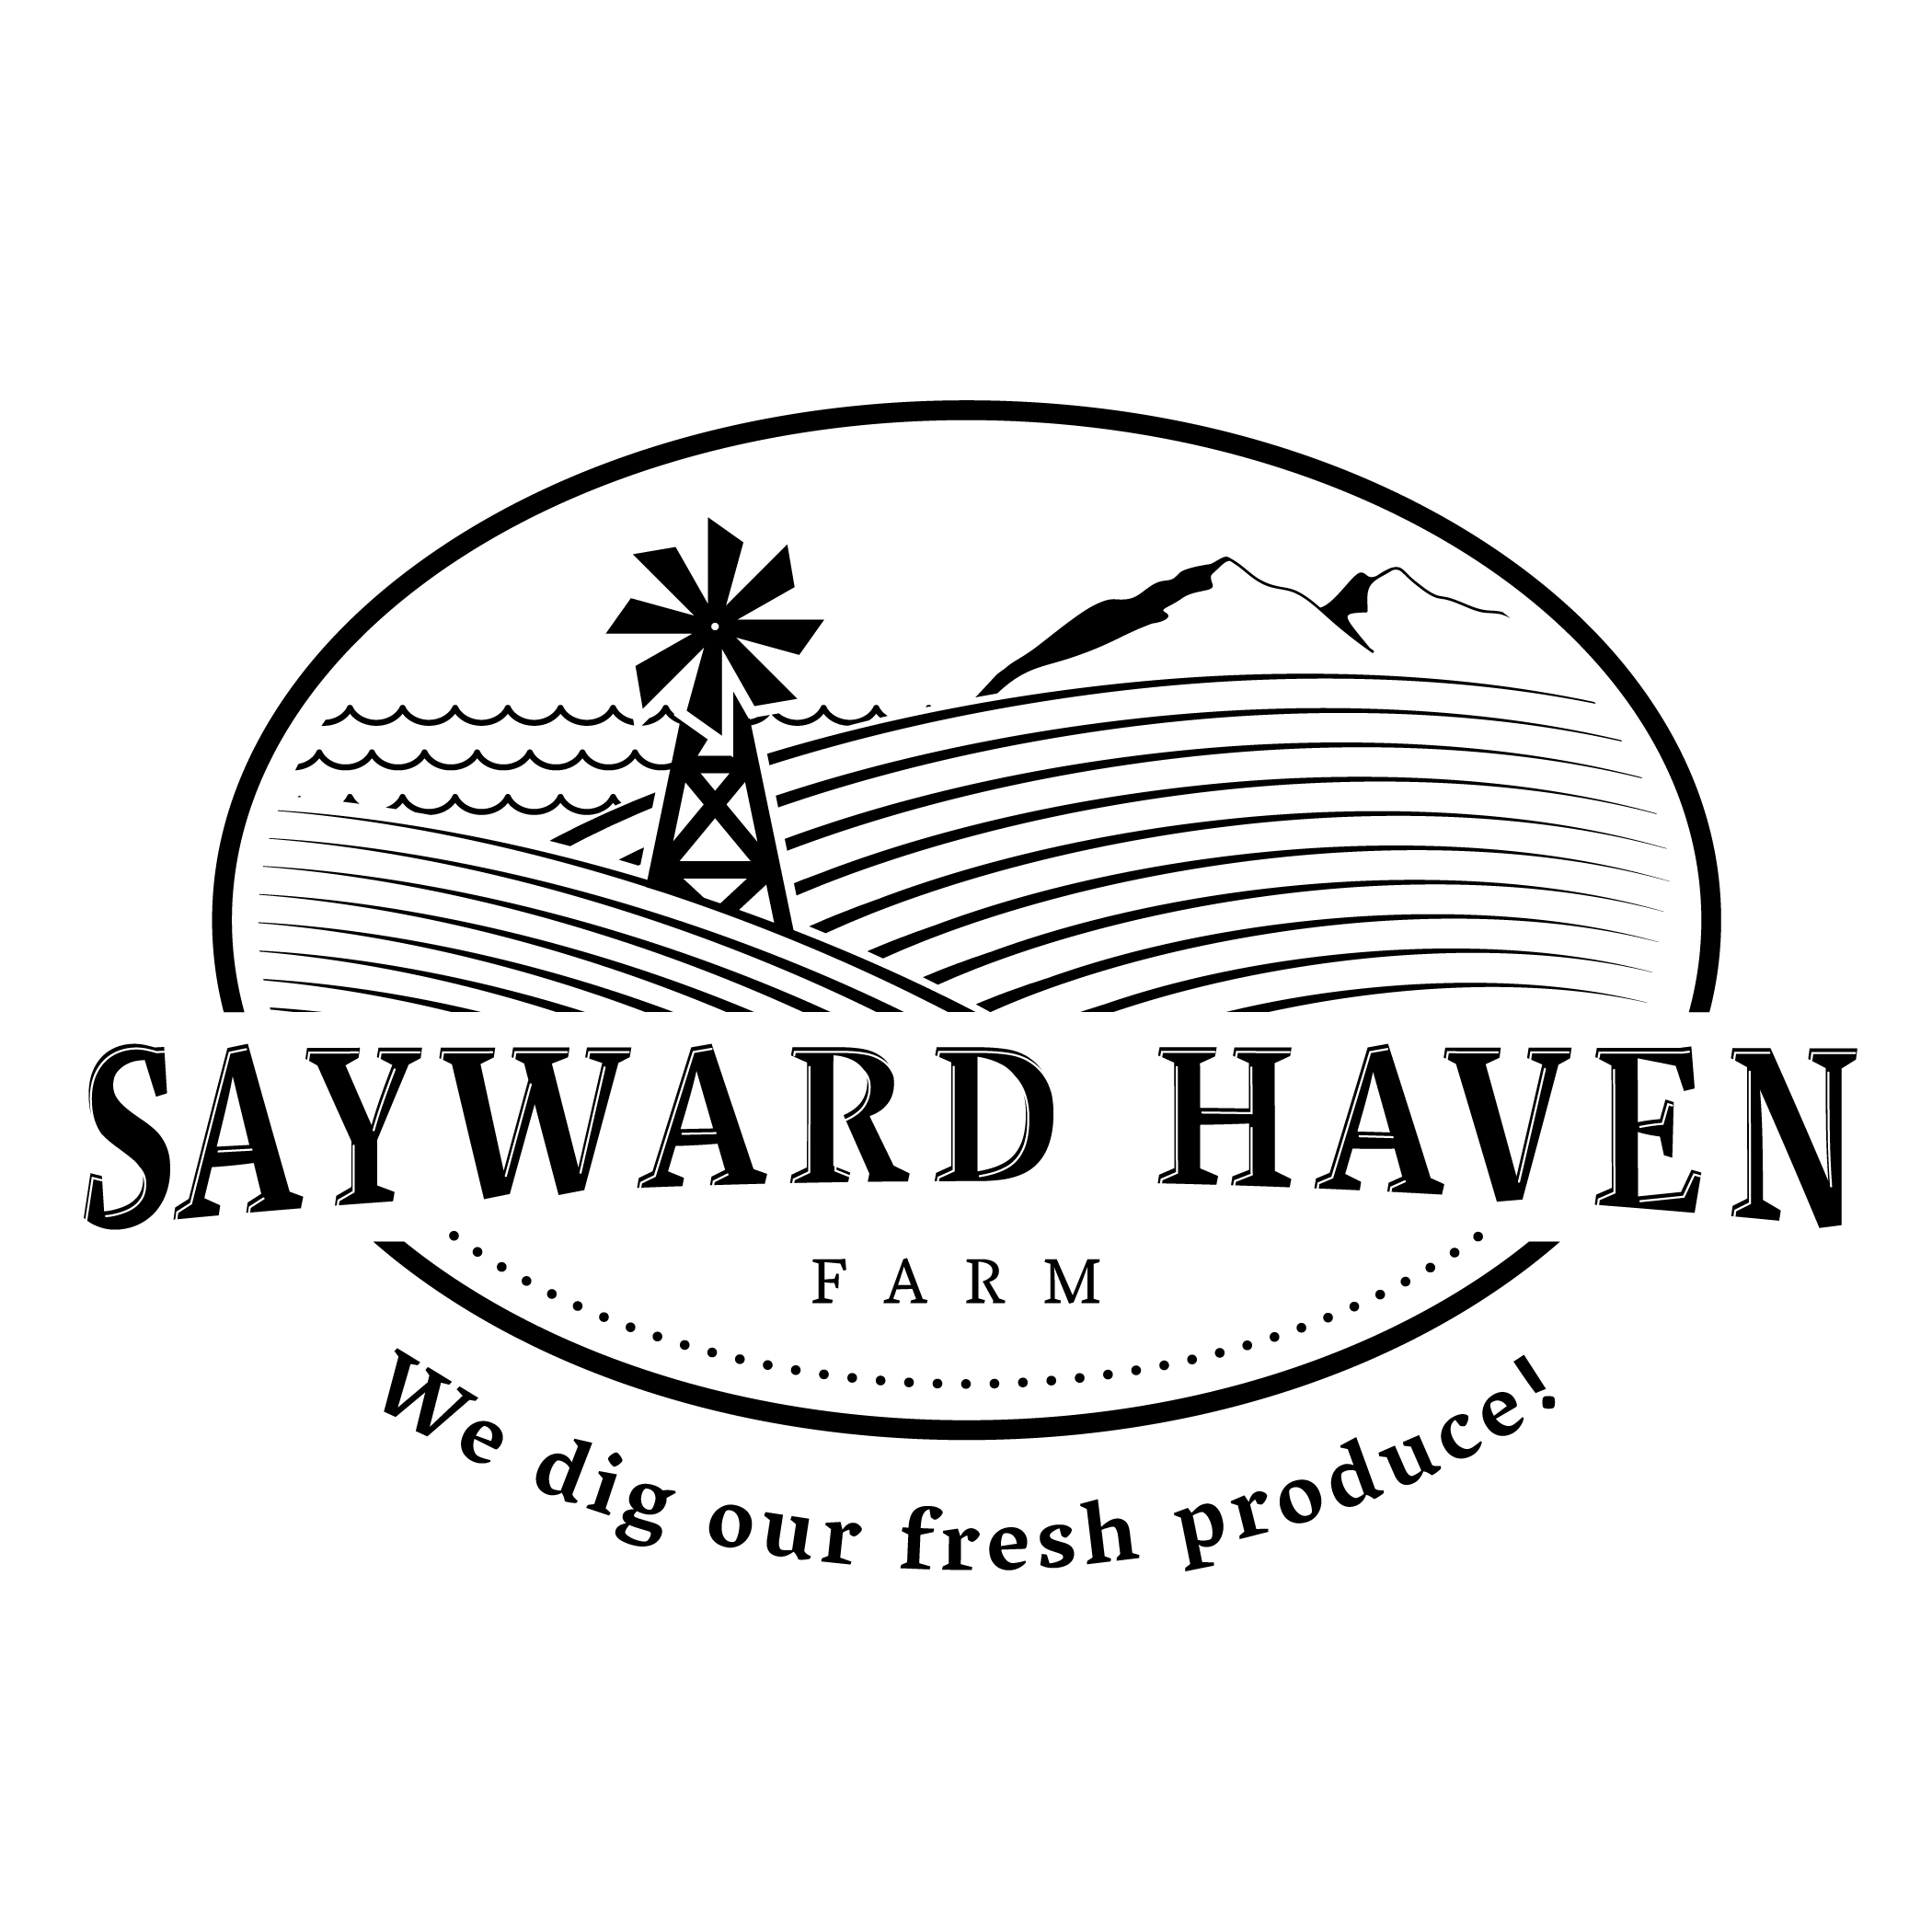 Sayward Haven Farm